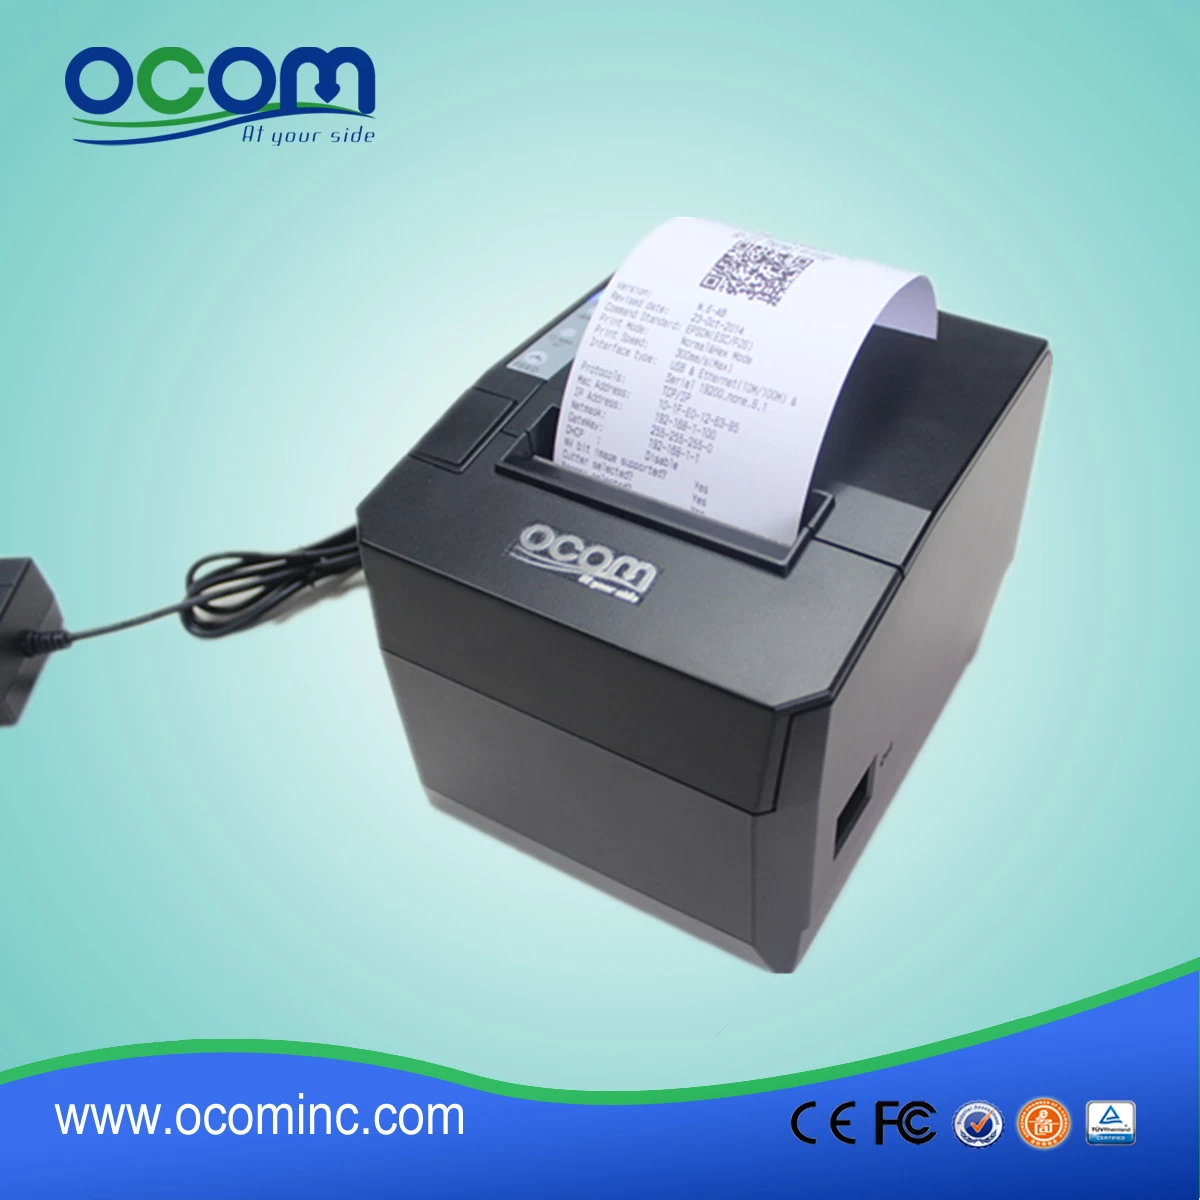 Re: 80mm desktop bluetooth thermal receipt printer-OCPP-88A-BUL